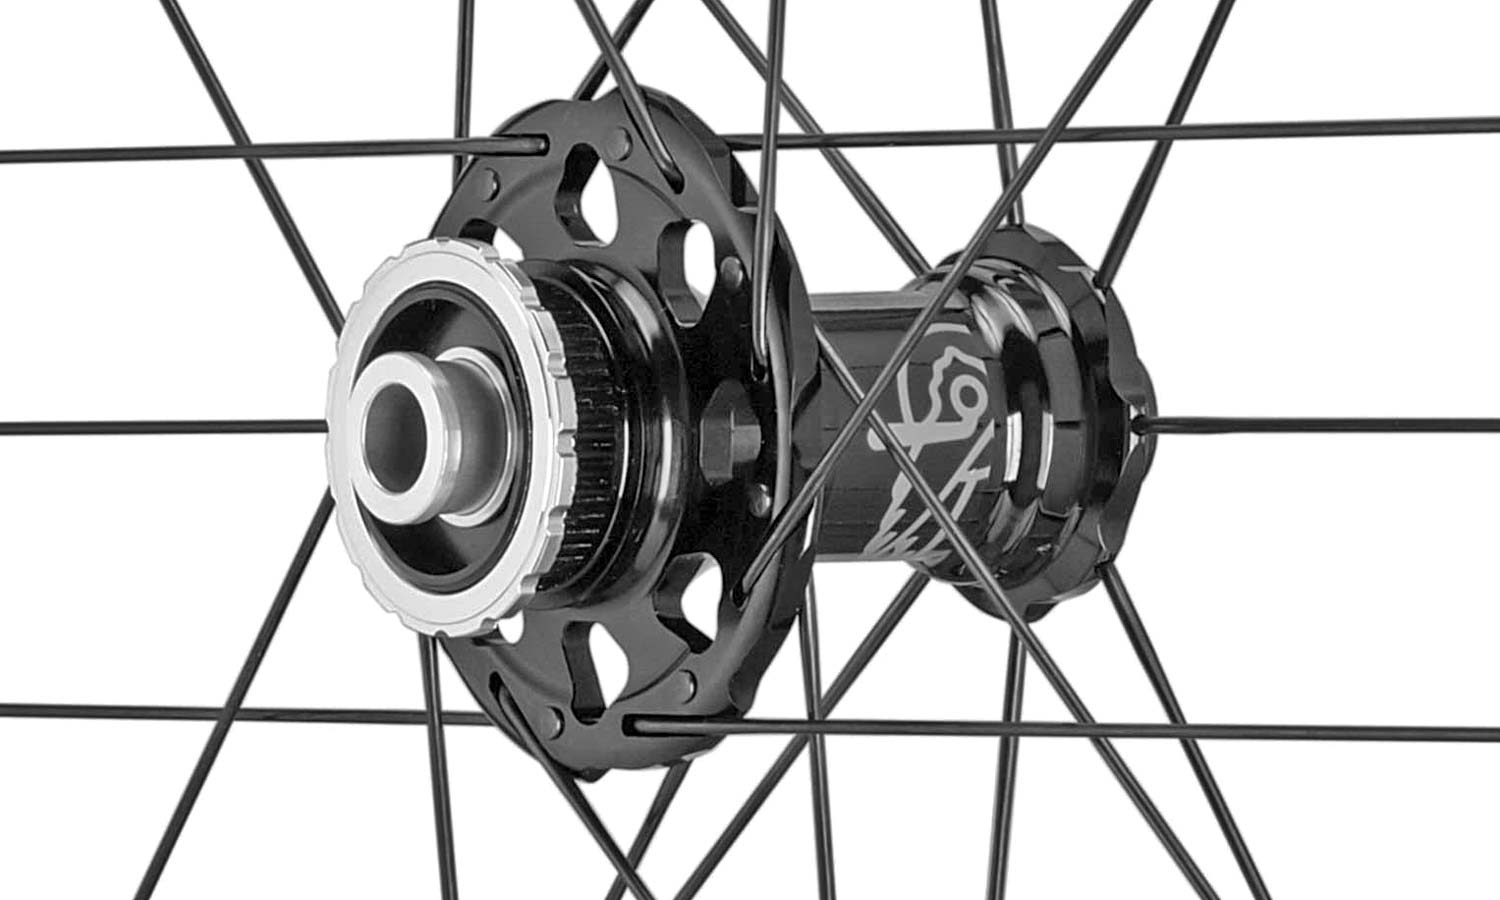 2020 Campagnolo Shamal Carbon DB wheels, 21mm wide internal Italian lightweight endurance gravel all-road bike wheelset